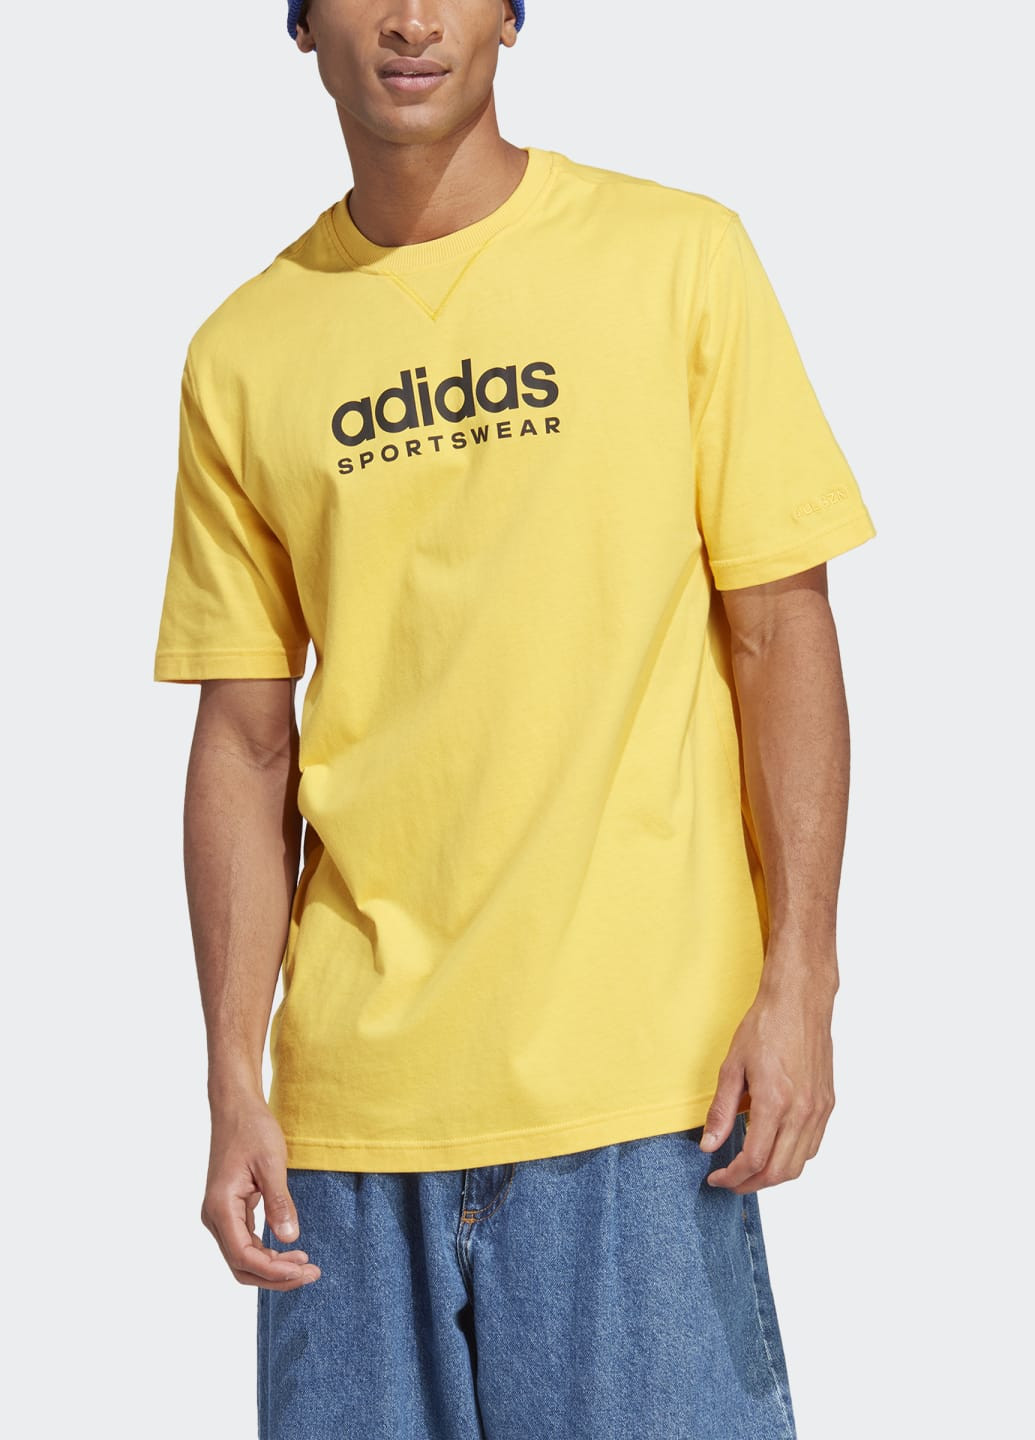 Золота футболка з принтом all szn adidas